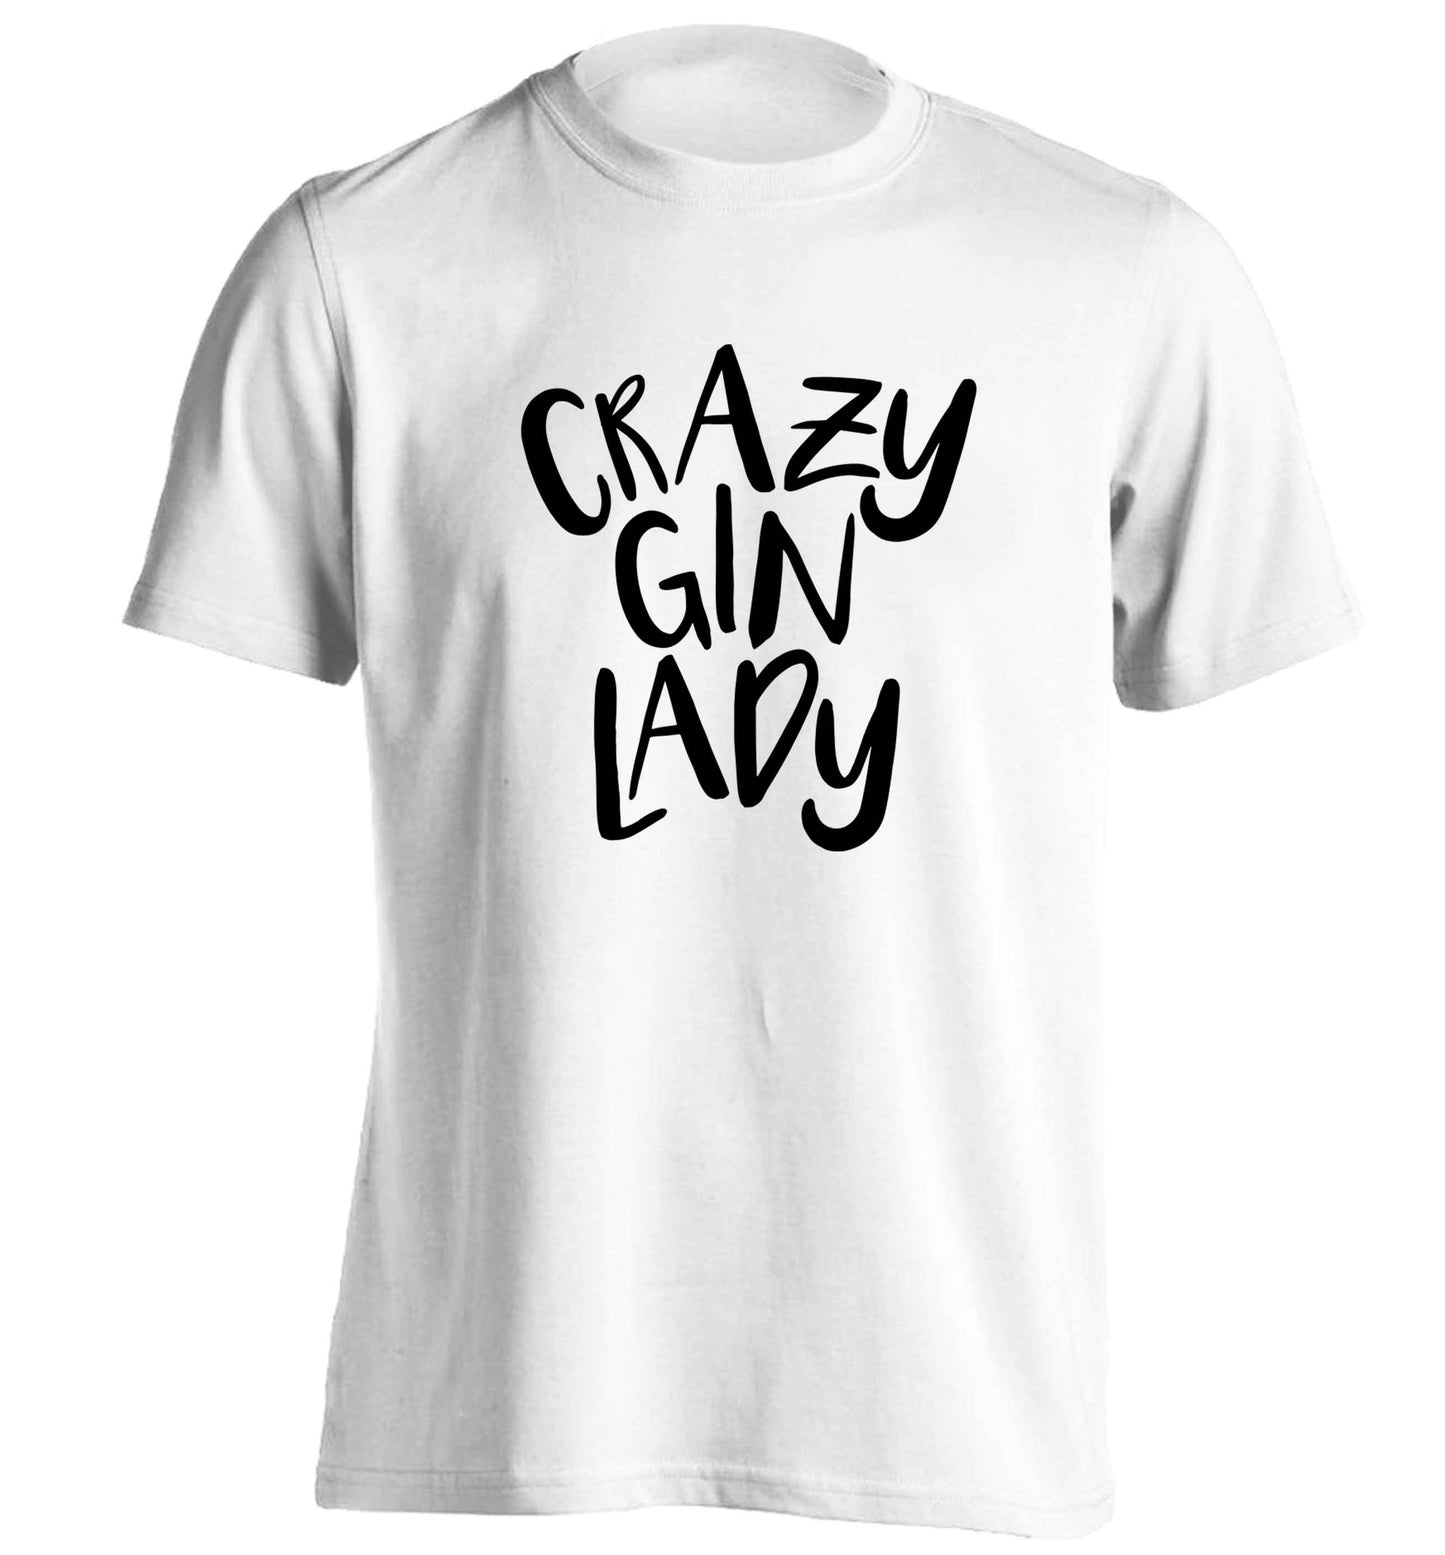 Crazy gin lady adults unisex white Tshirt 2XL